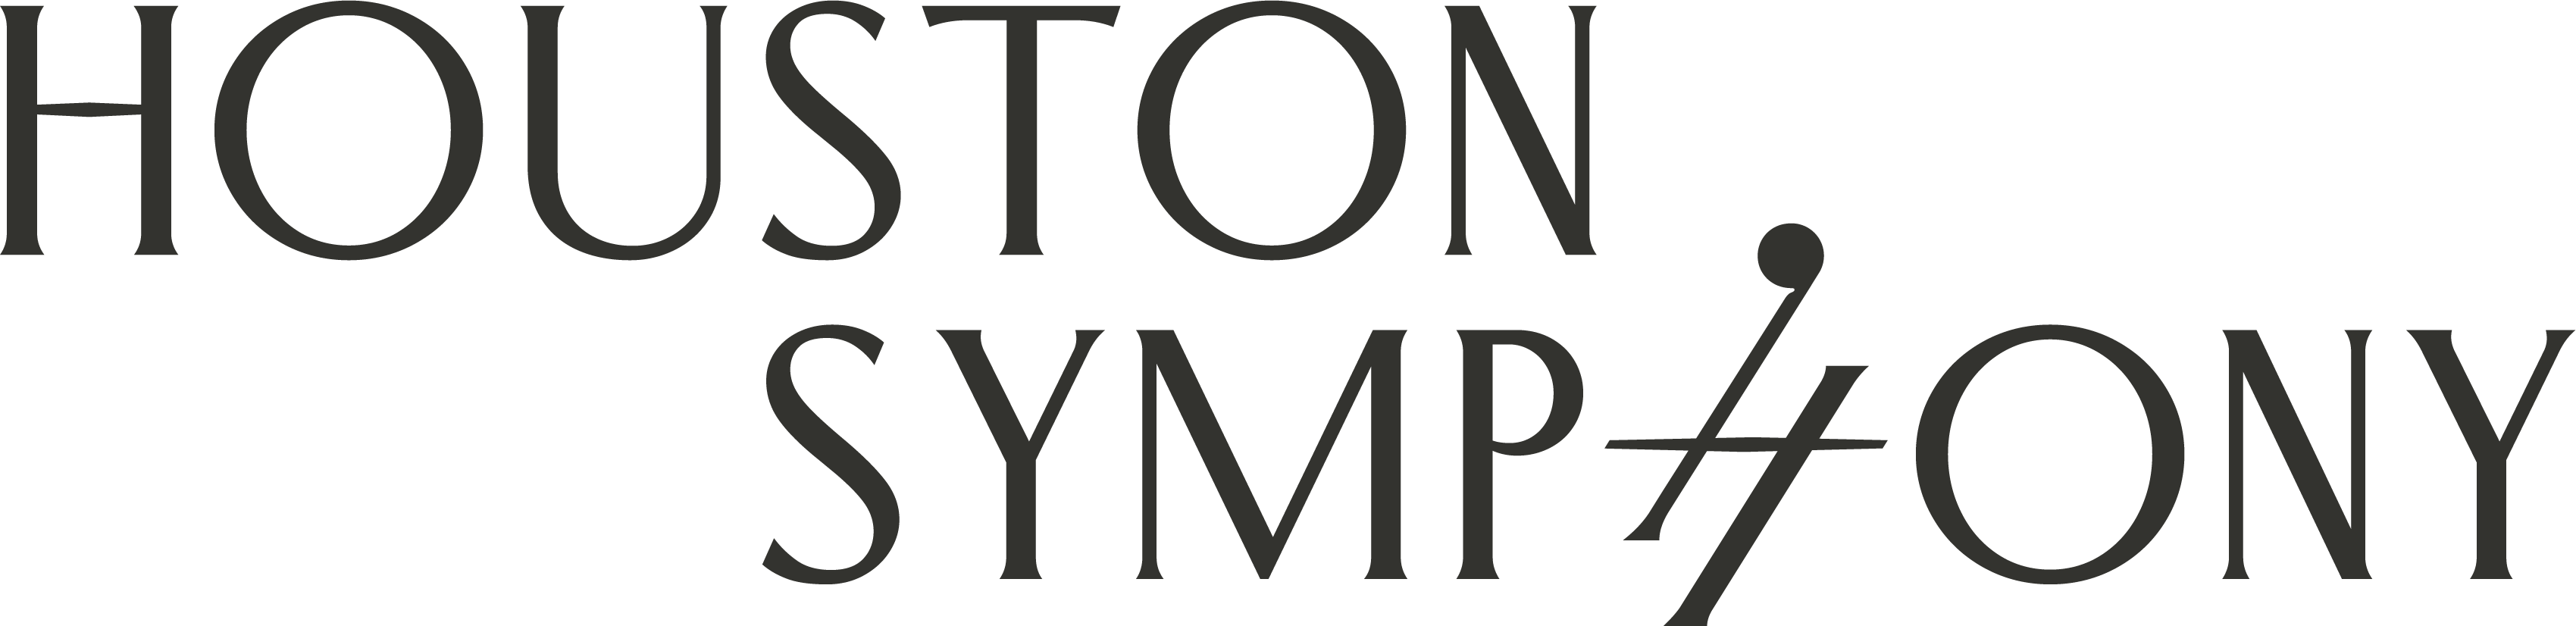 the Houston Symphony Endowment